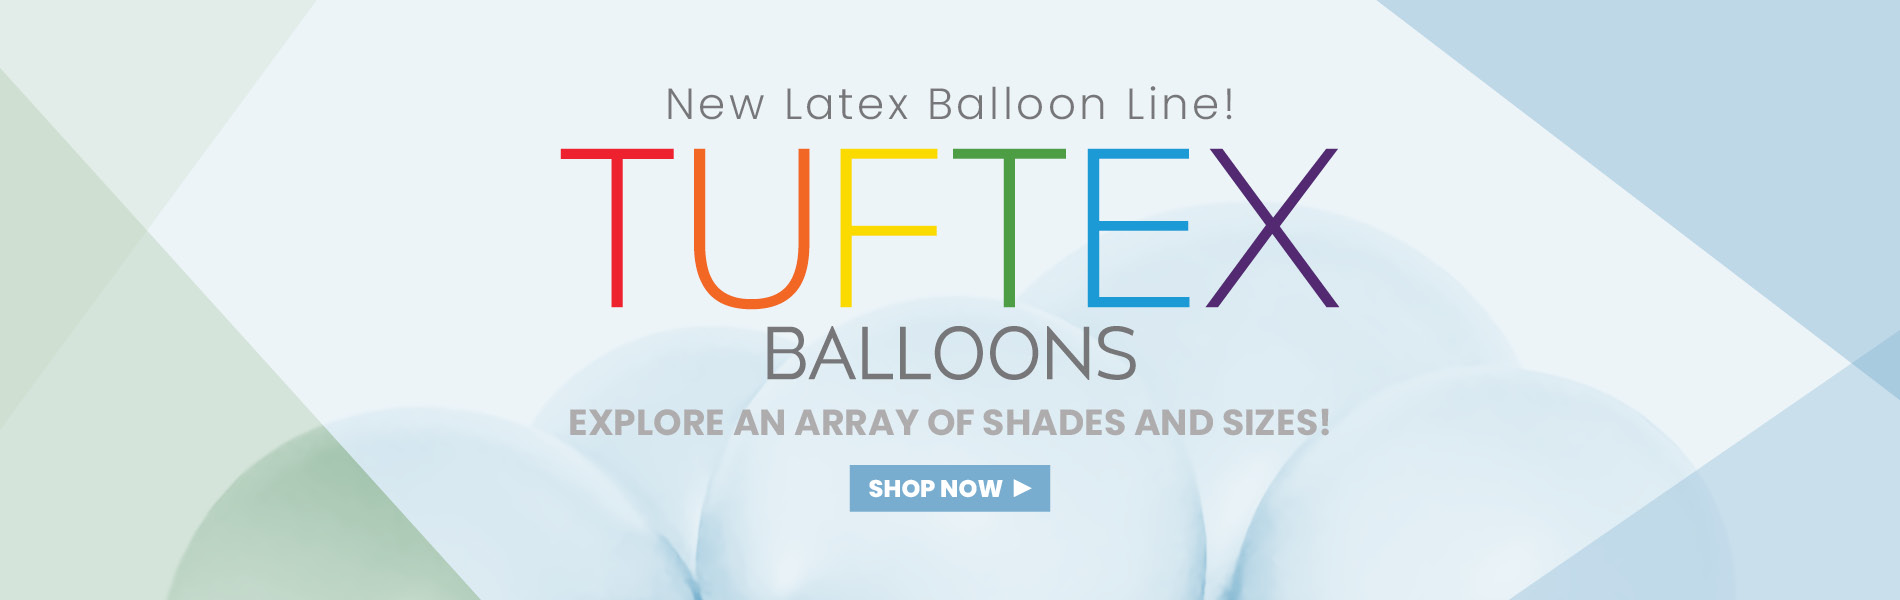 Tuftex Balloons Now at burton and Burton